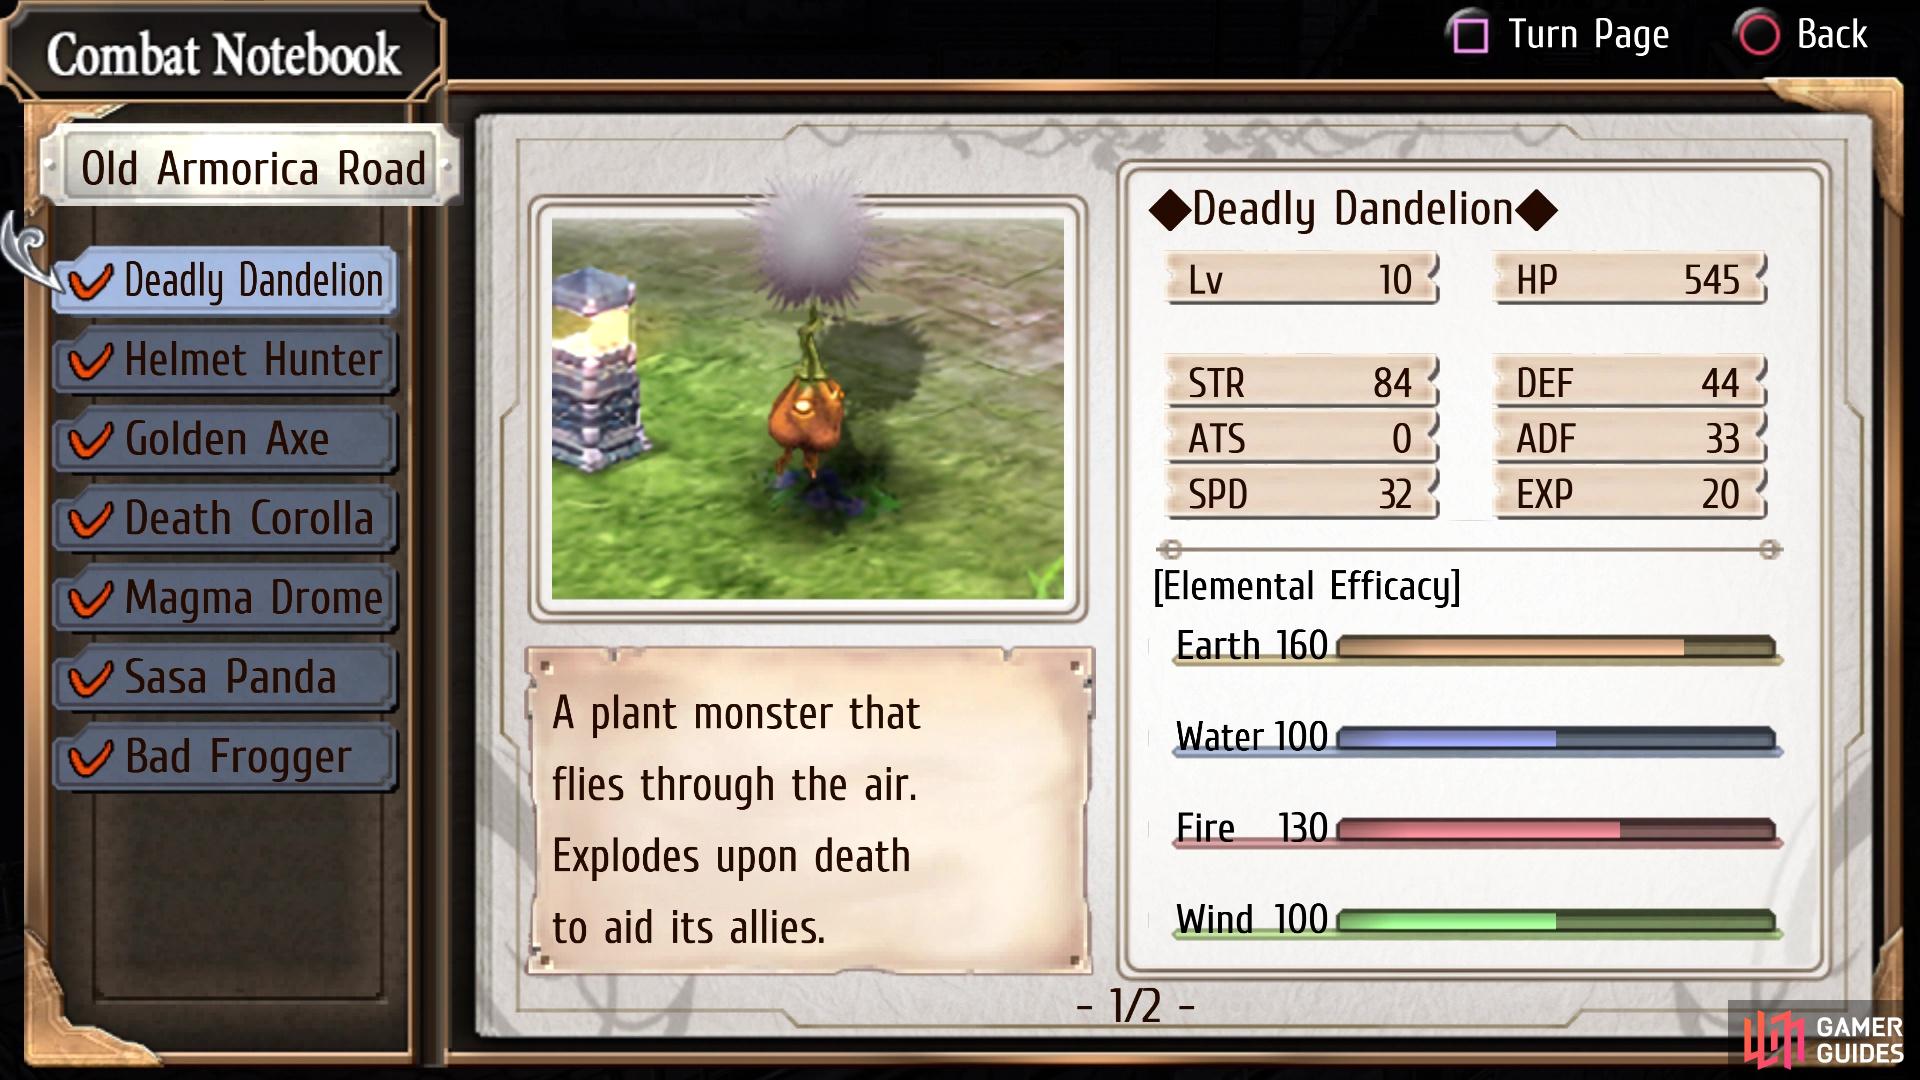 The Deadly Dandelion enemy